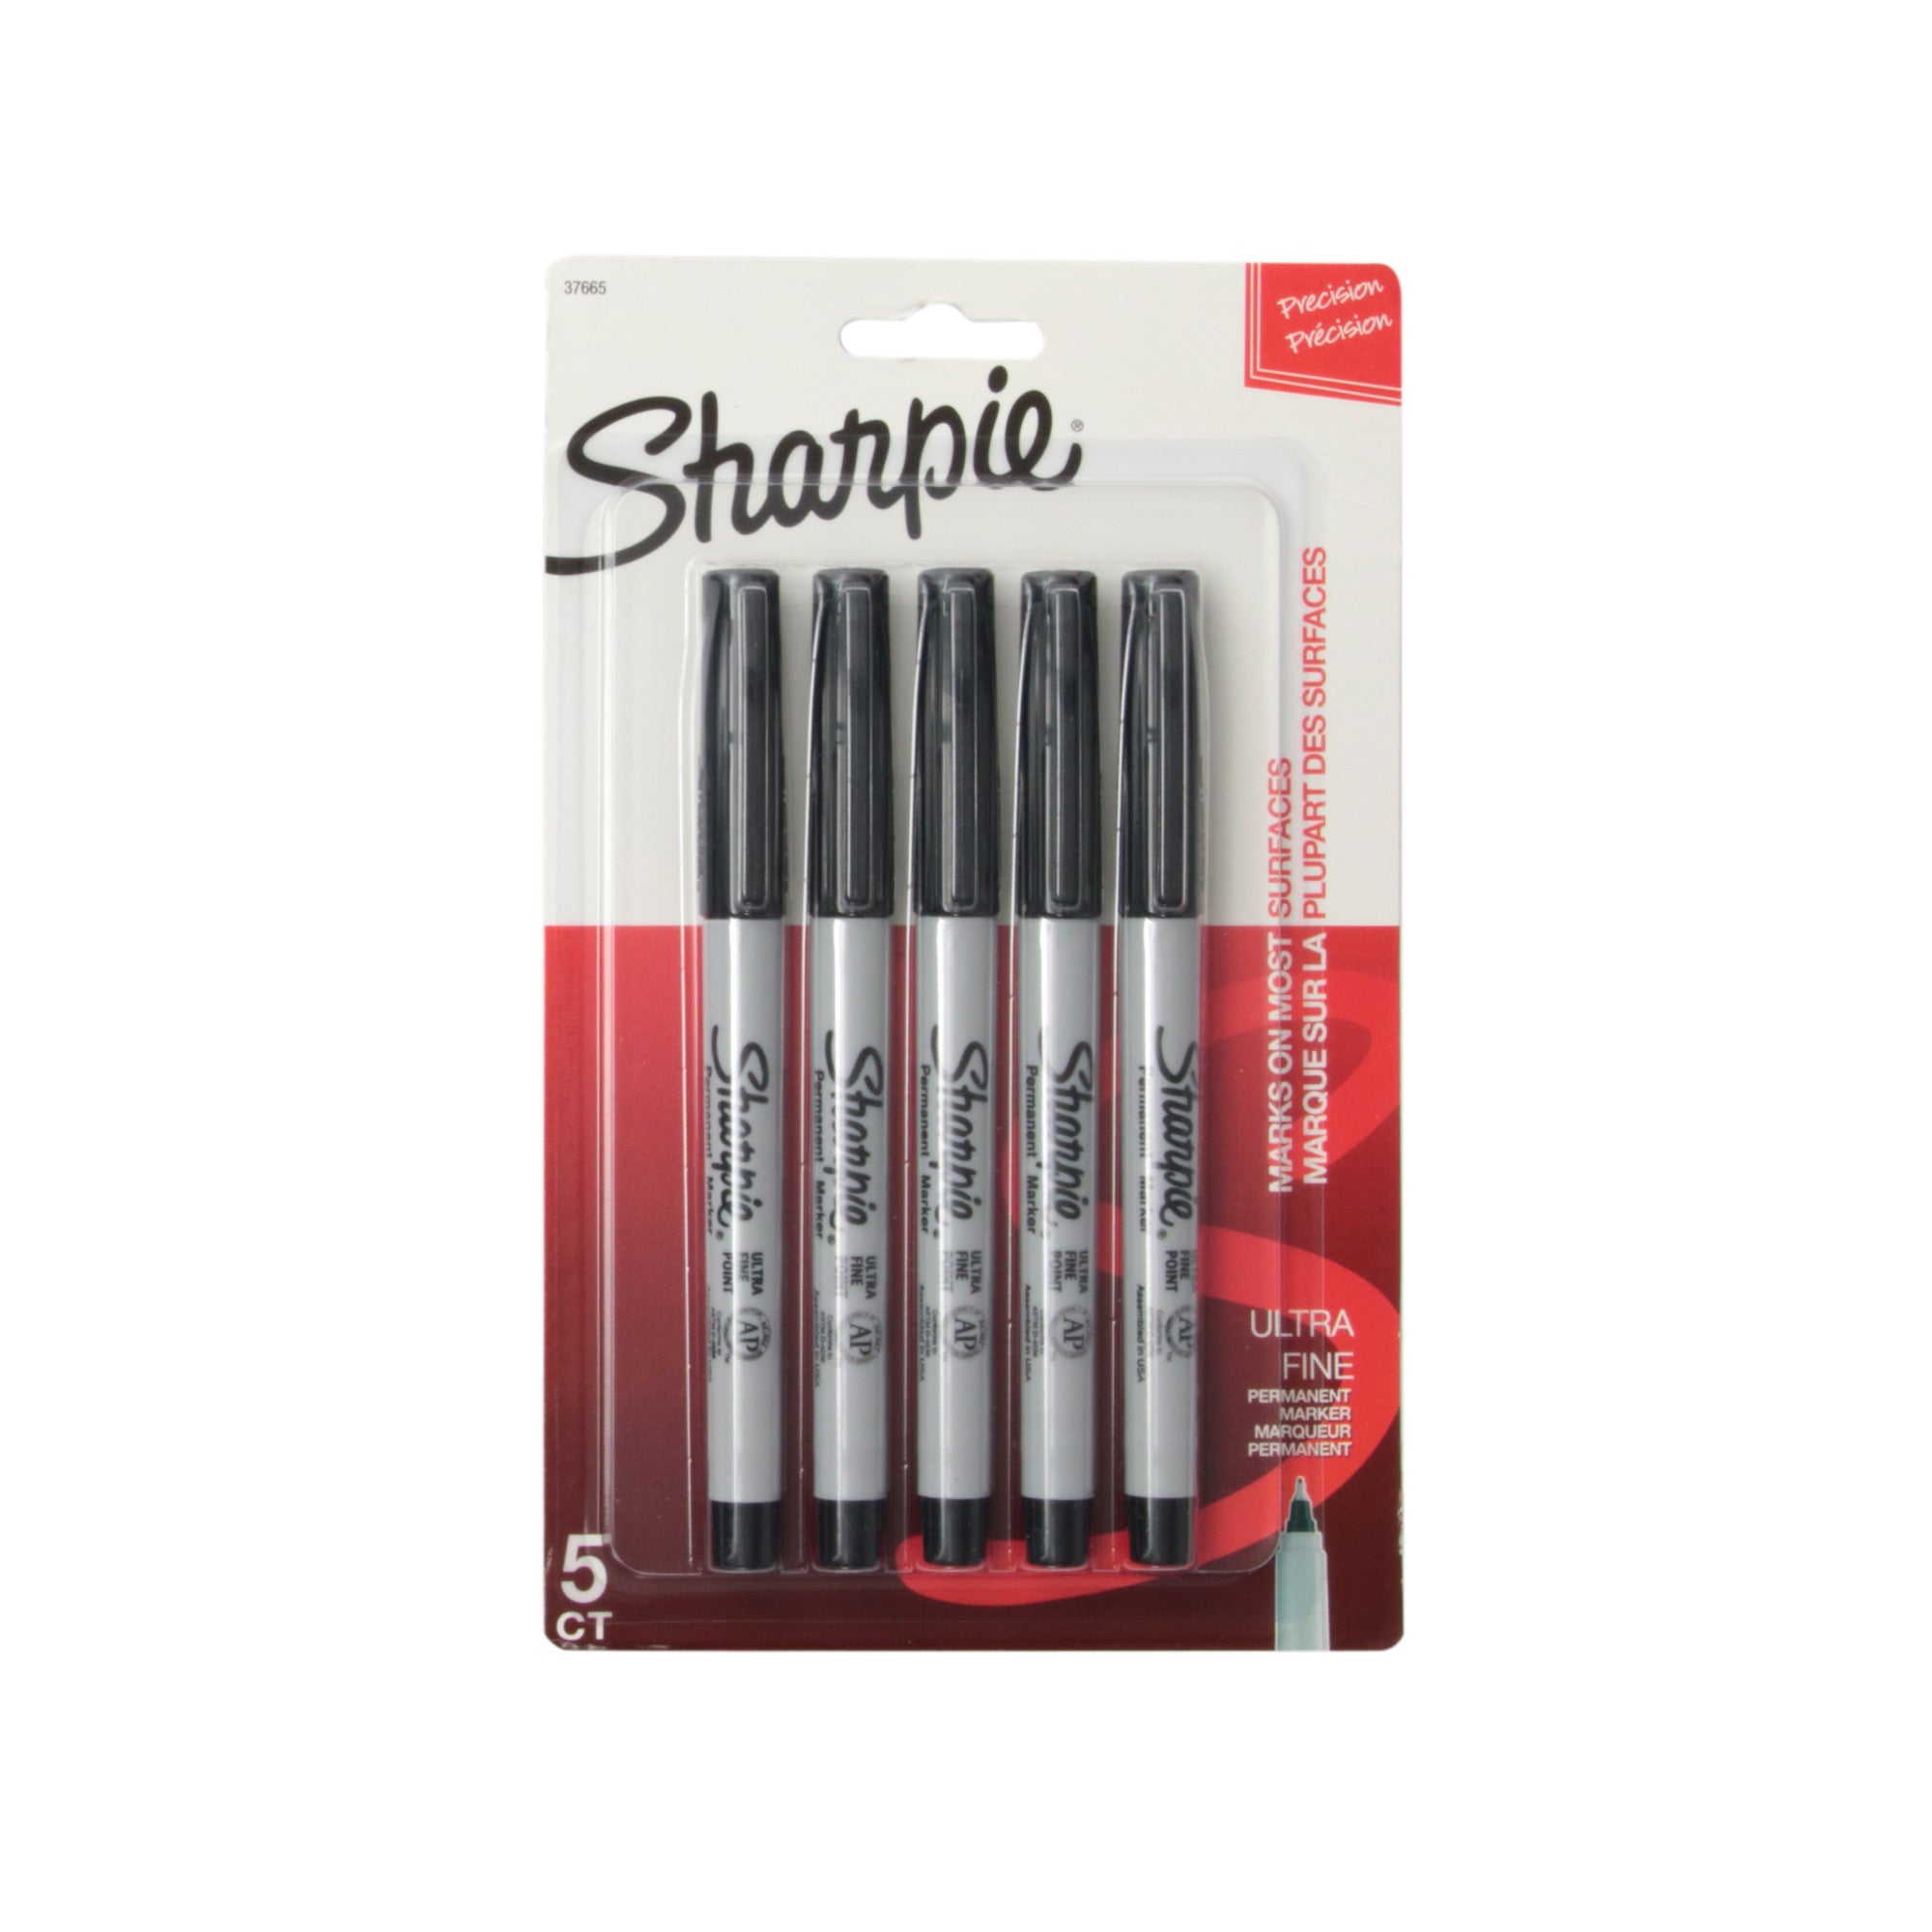 Sharpie Stylo Pen Ultra Fine Tip 0.3mm Fibre 4 Pack Black Red Blue